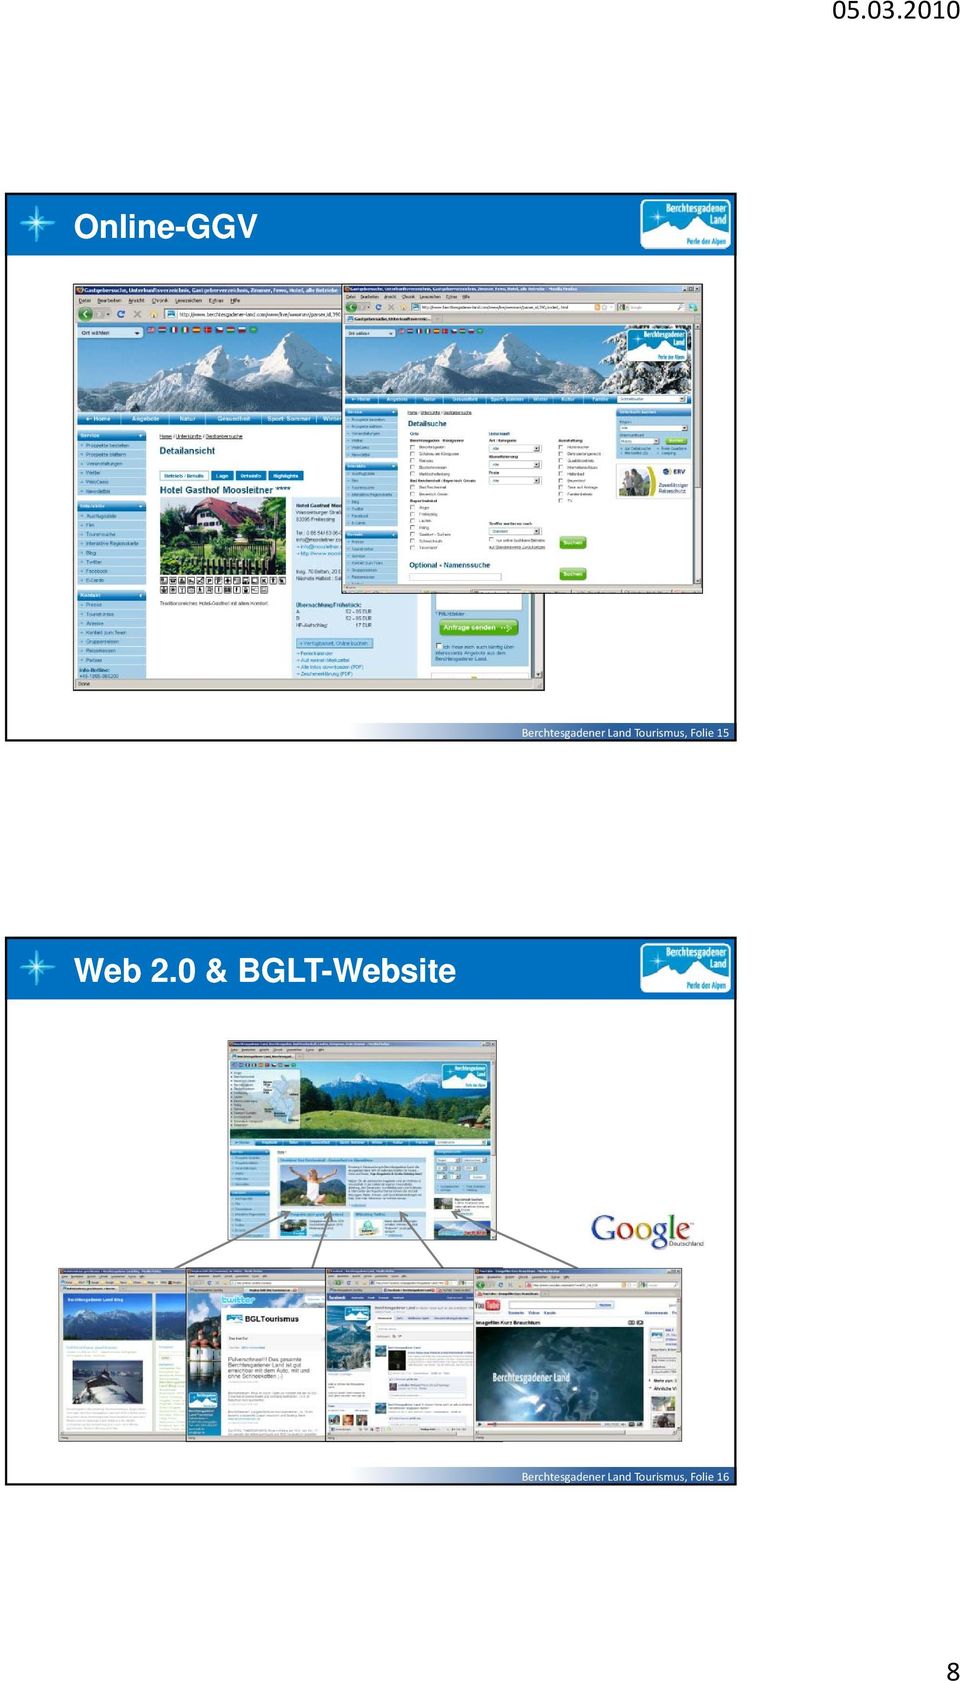 2.0 & BGLT-Website